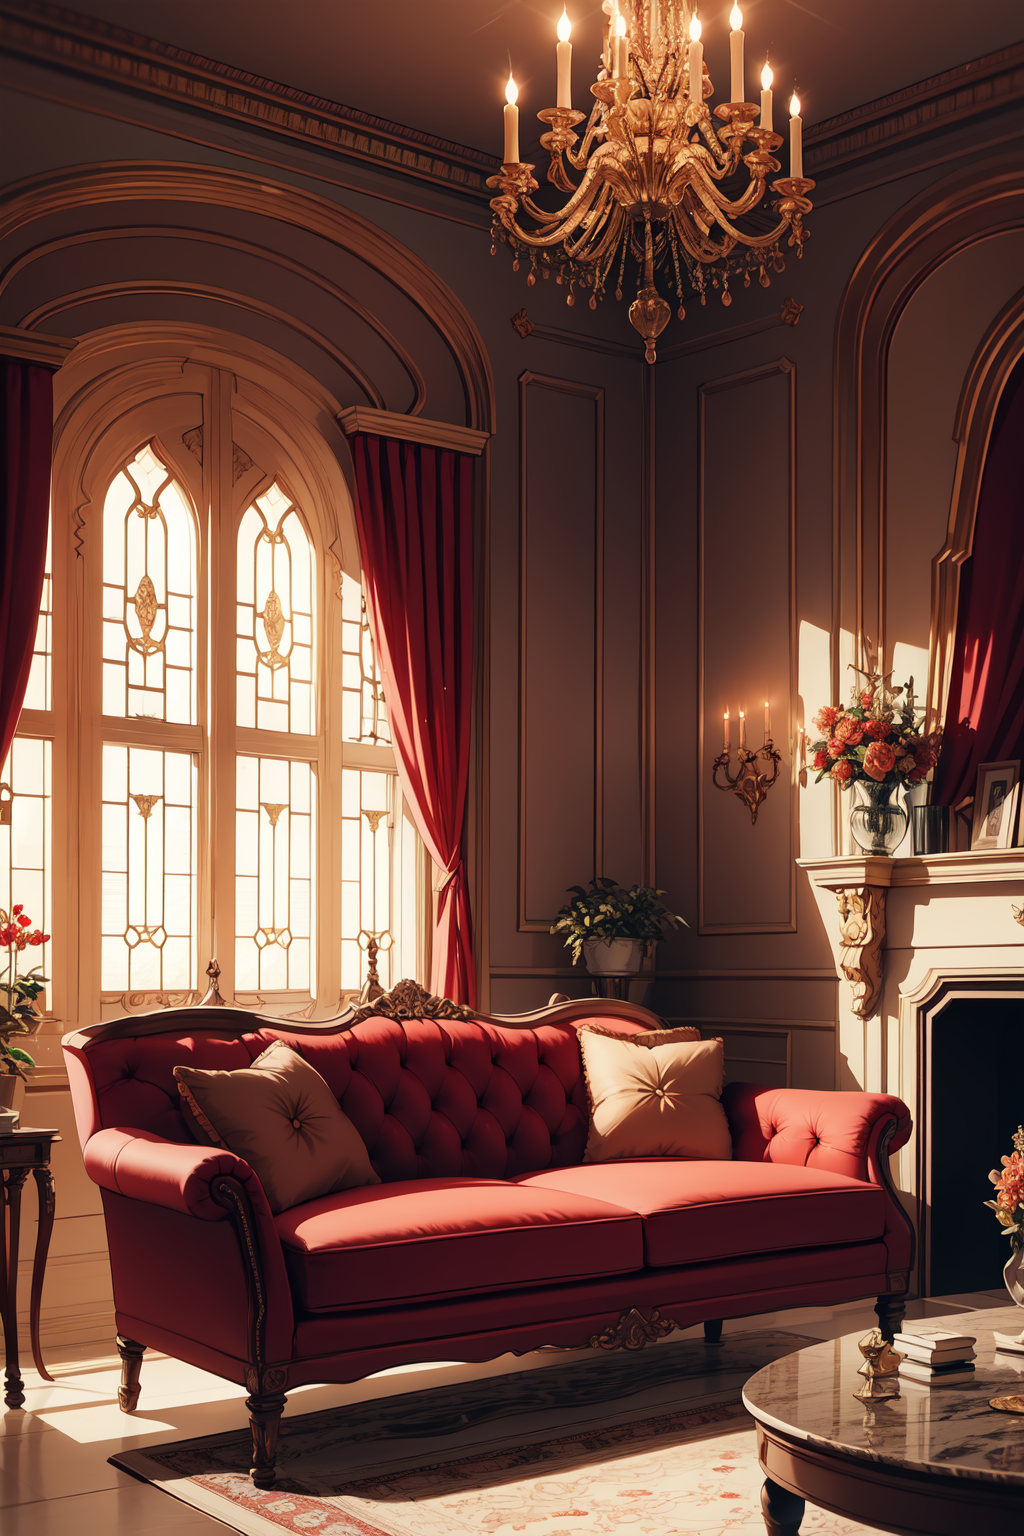 indoors, ampire, luxurious interior, marble (stone), chimney, red sofa, red curtains, windows, volumetric lighting, soft l...